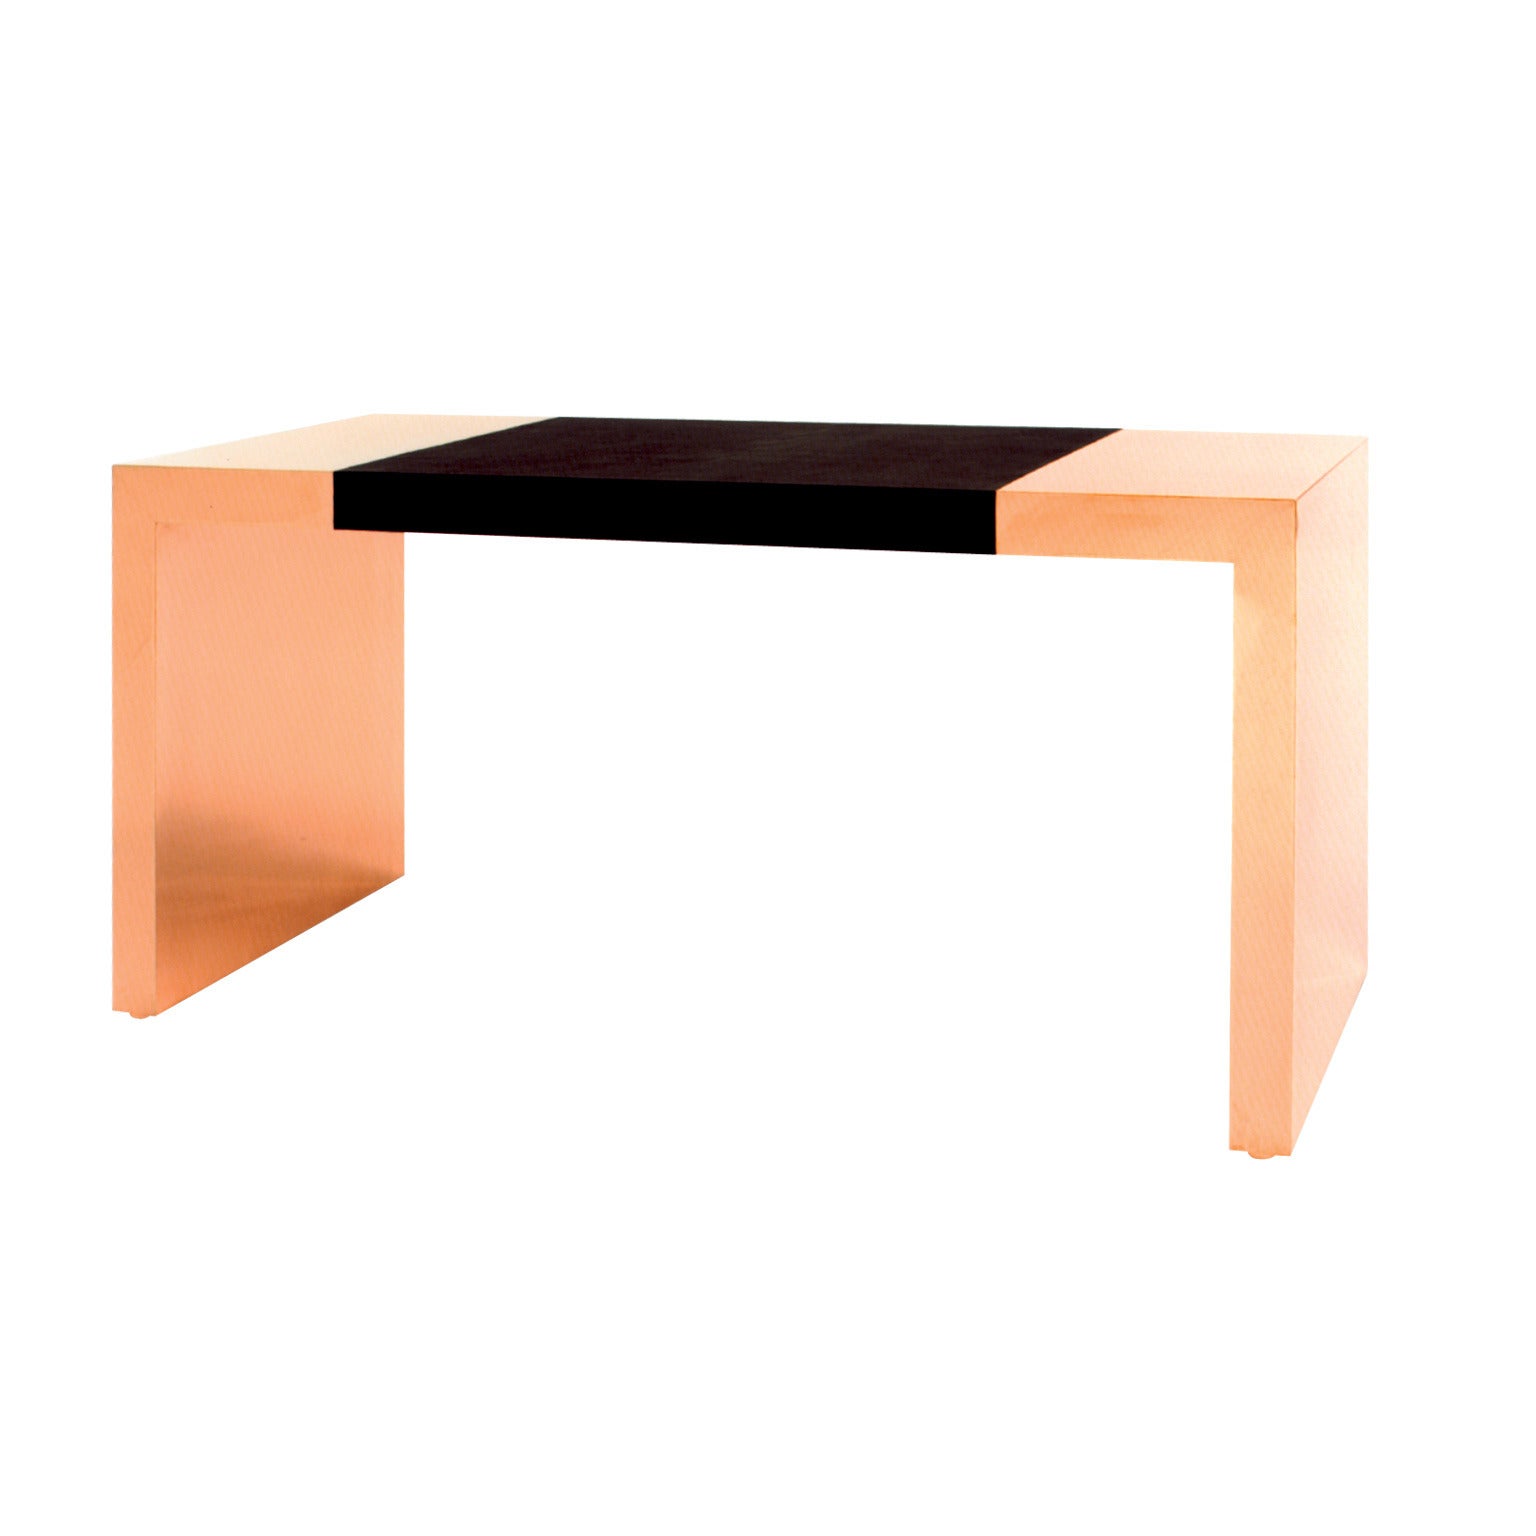 Polished Copper and Hide Desk For Sale